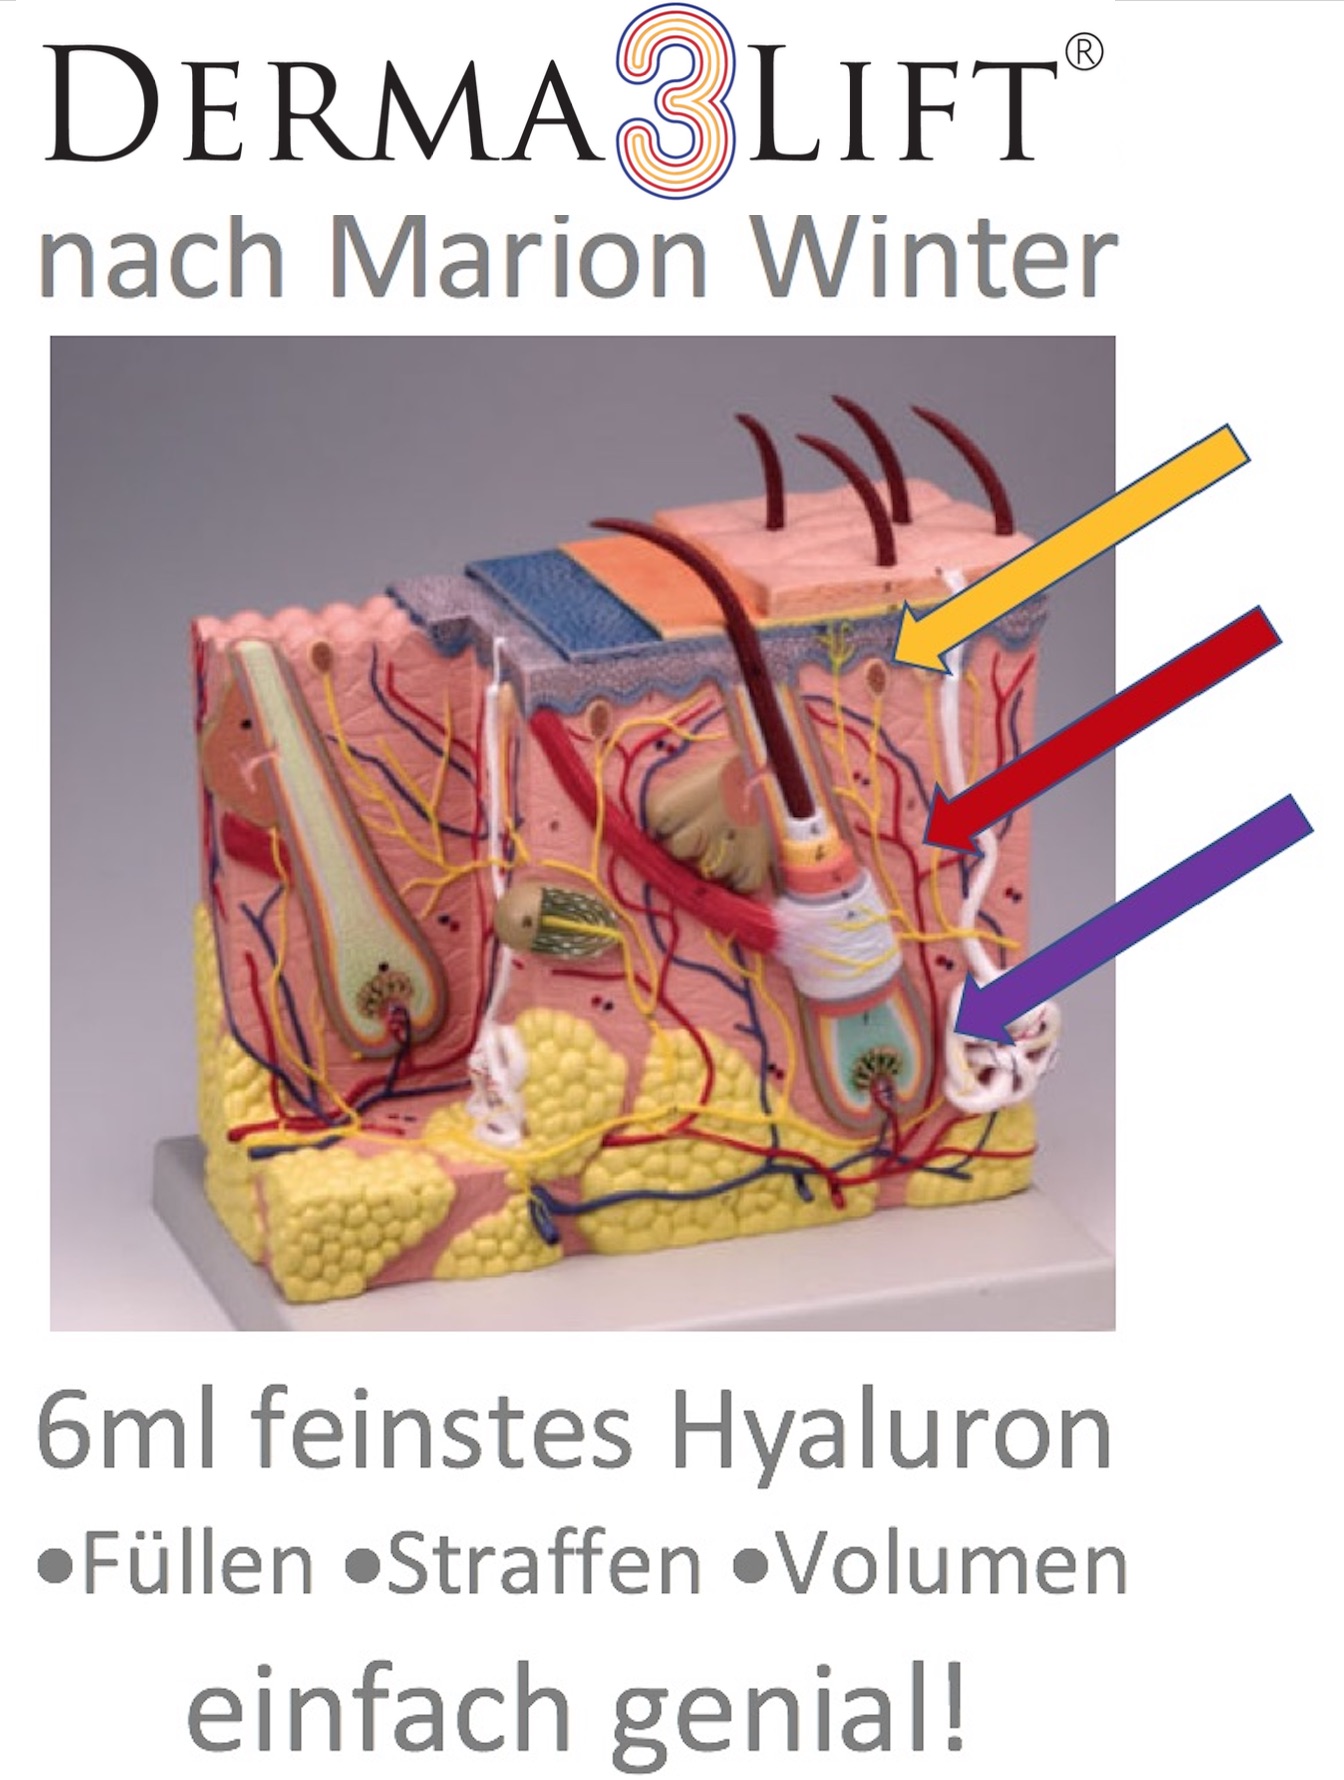 Derma3Lift nach Marion Winter, Ästhetik-Konzepte